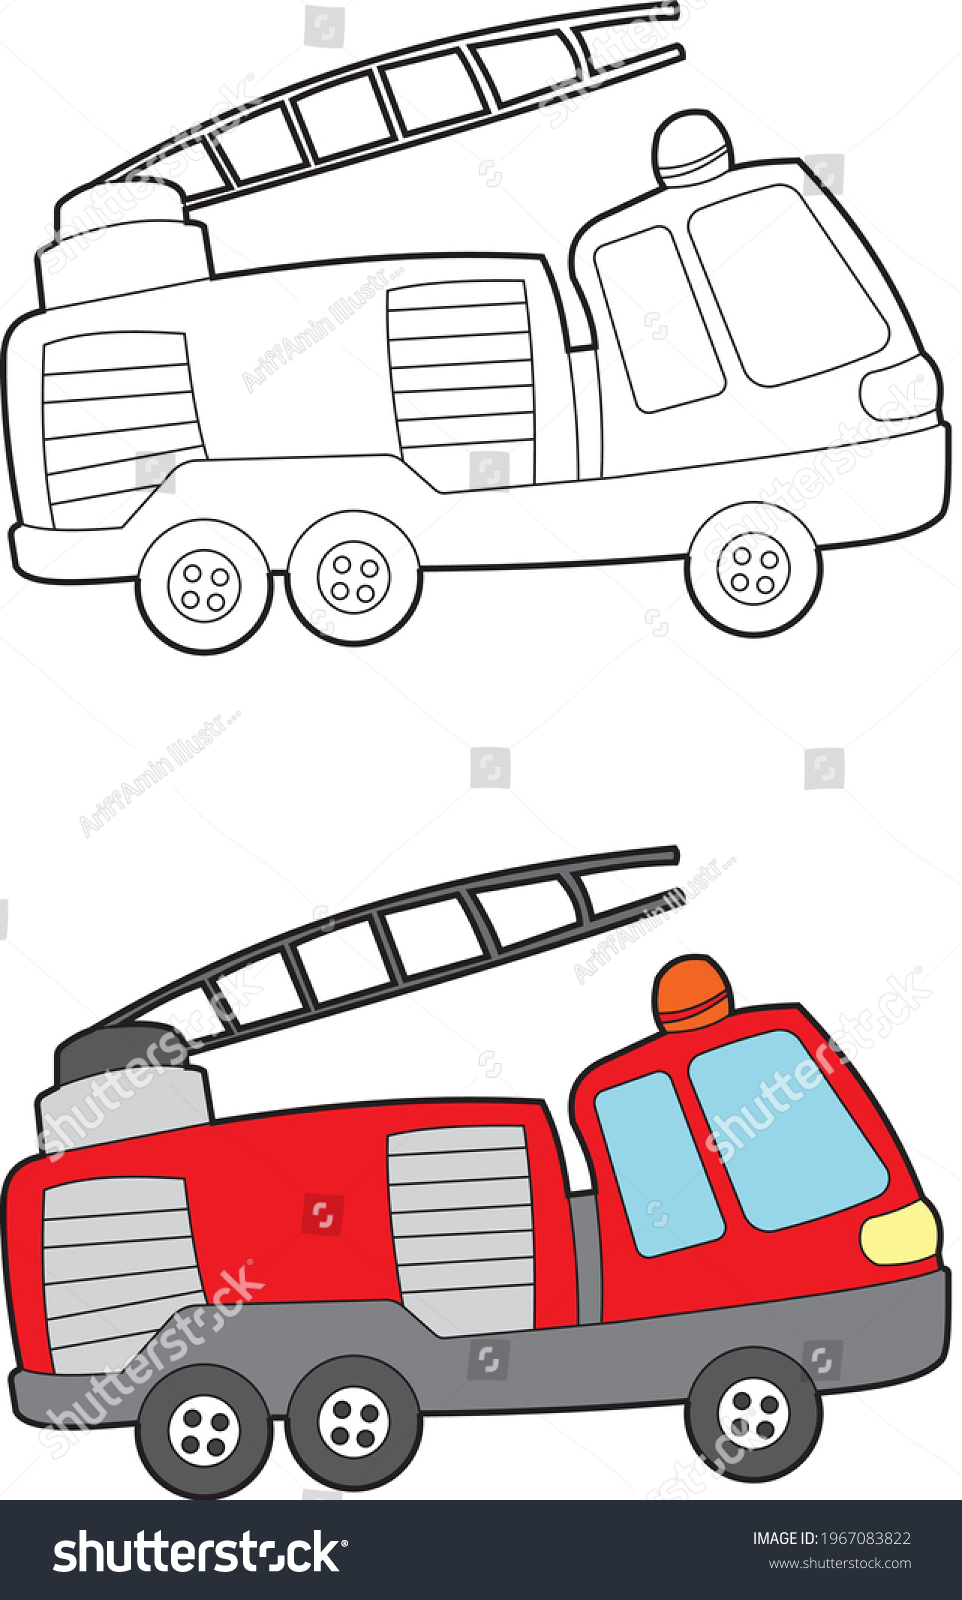 Firetruck Vector Drawing Transportation Learning Education Stock Vector ...